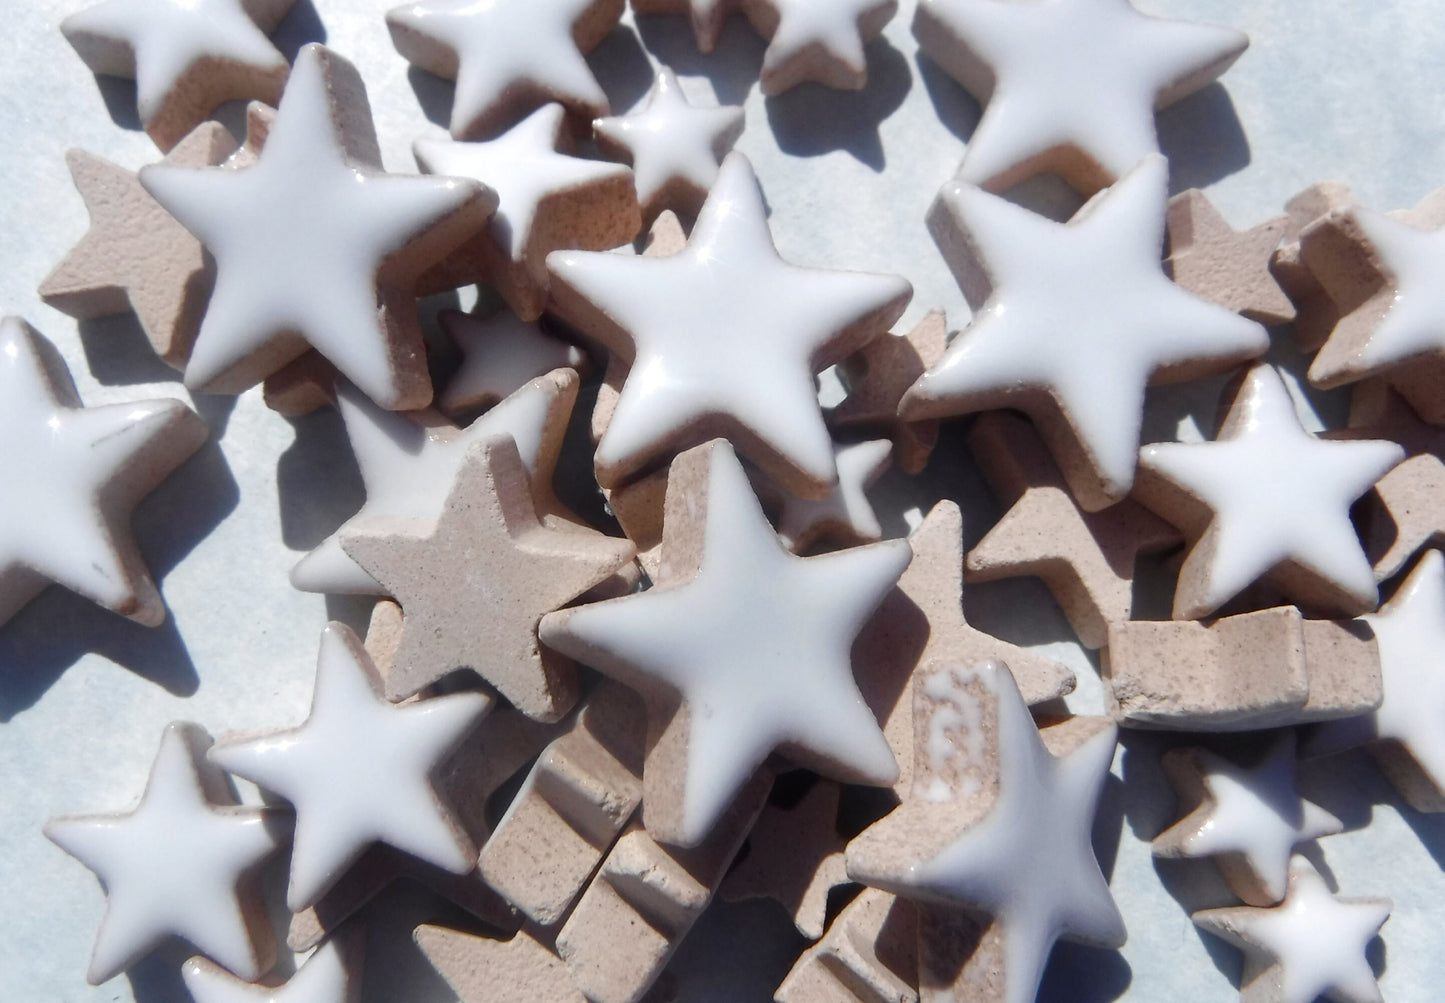 White Stars Mosaic Tiles - 50g Ceramic in Mix of 3 Sizes - 20mm, 15mm, 10mm